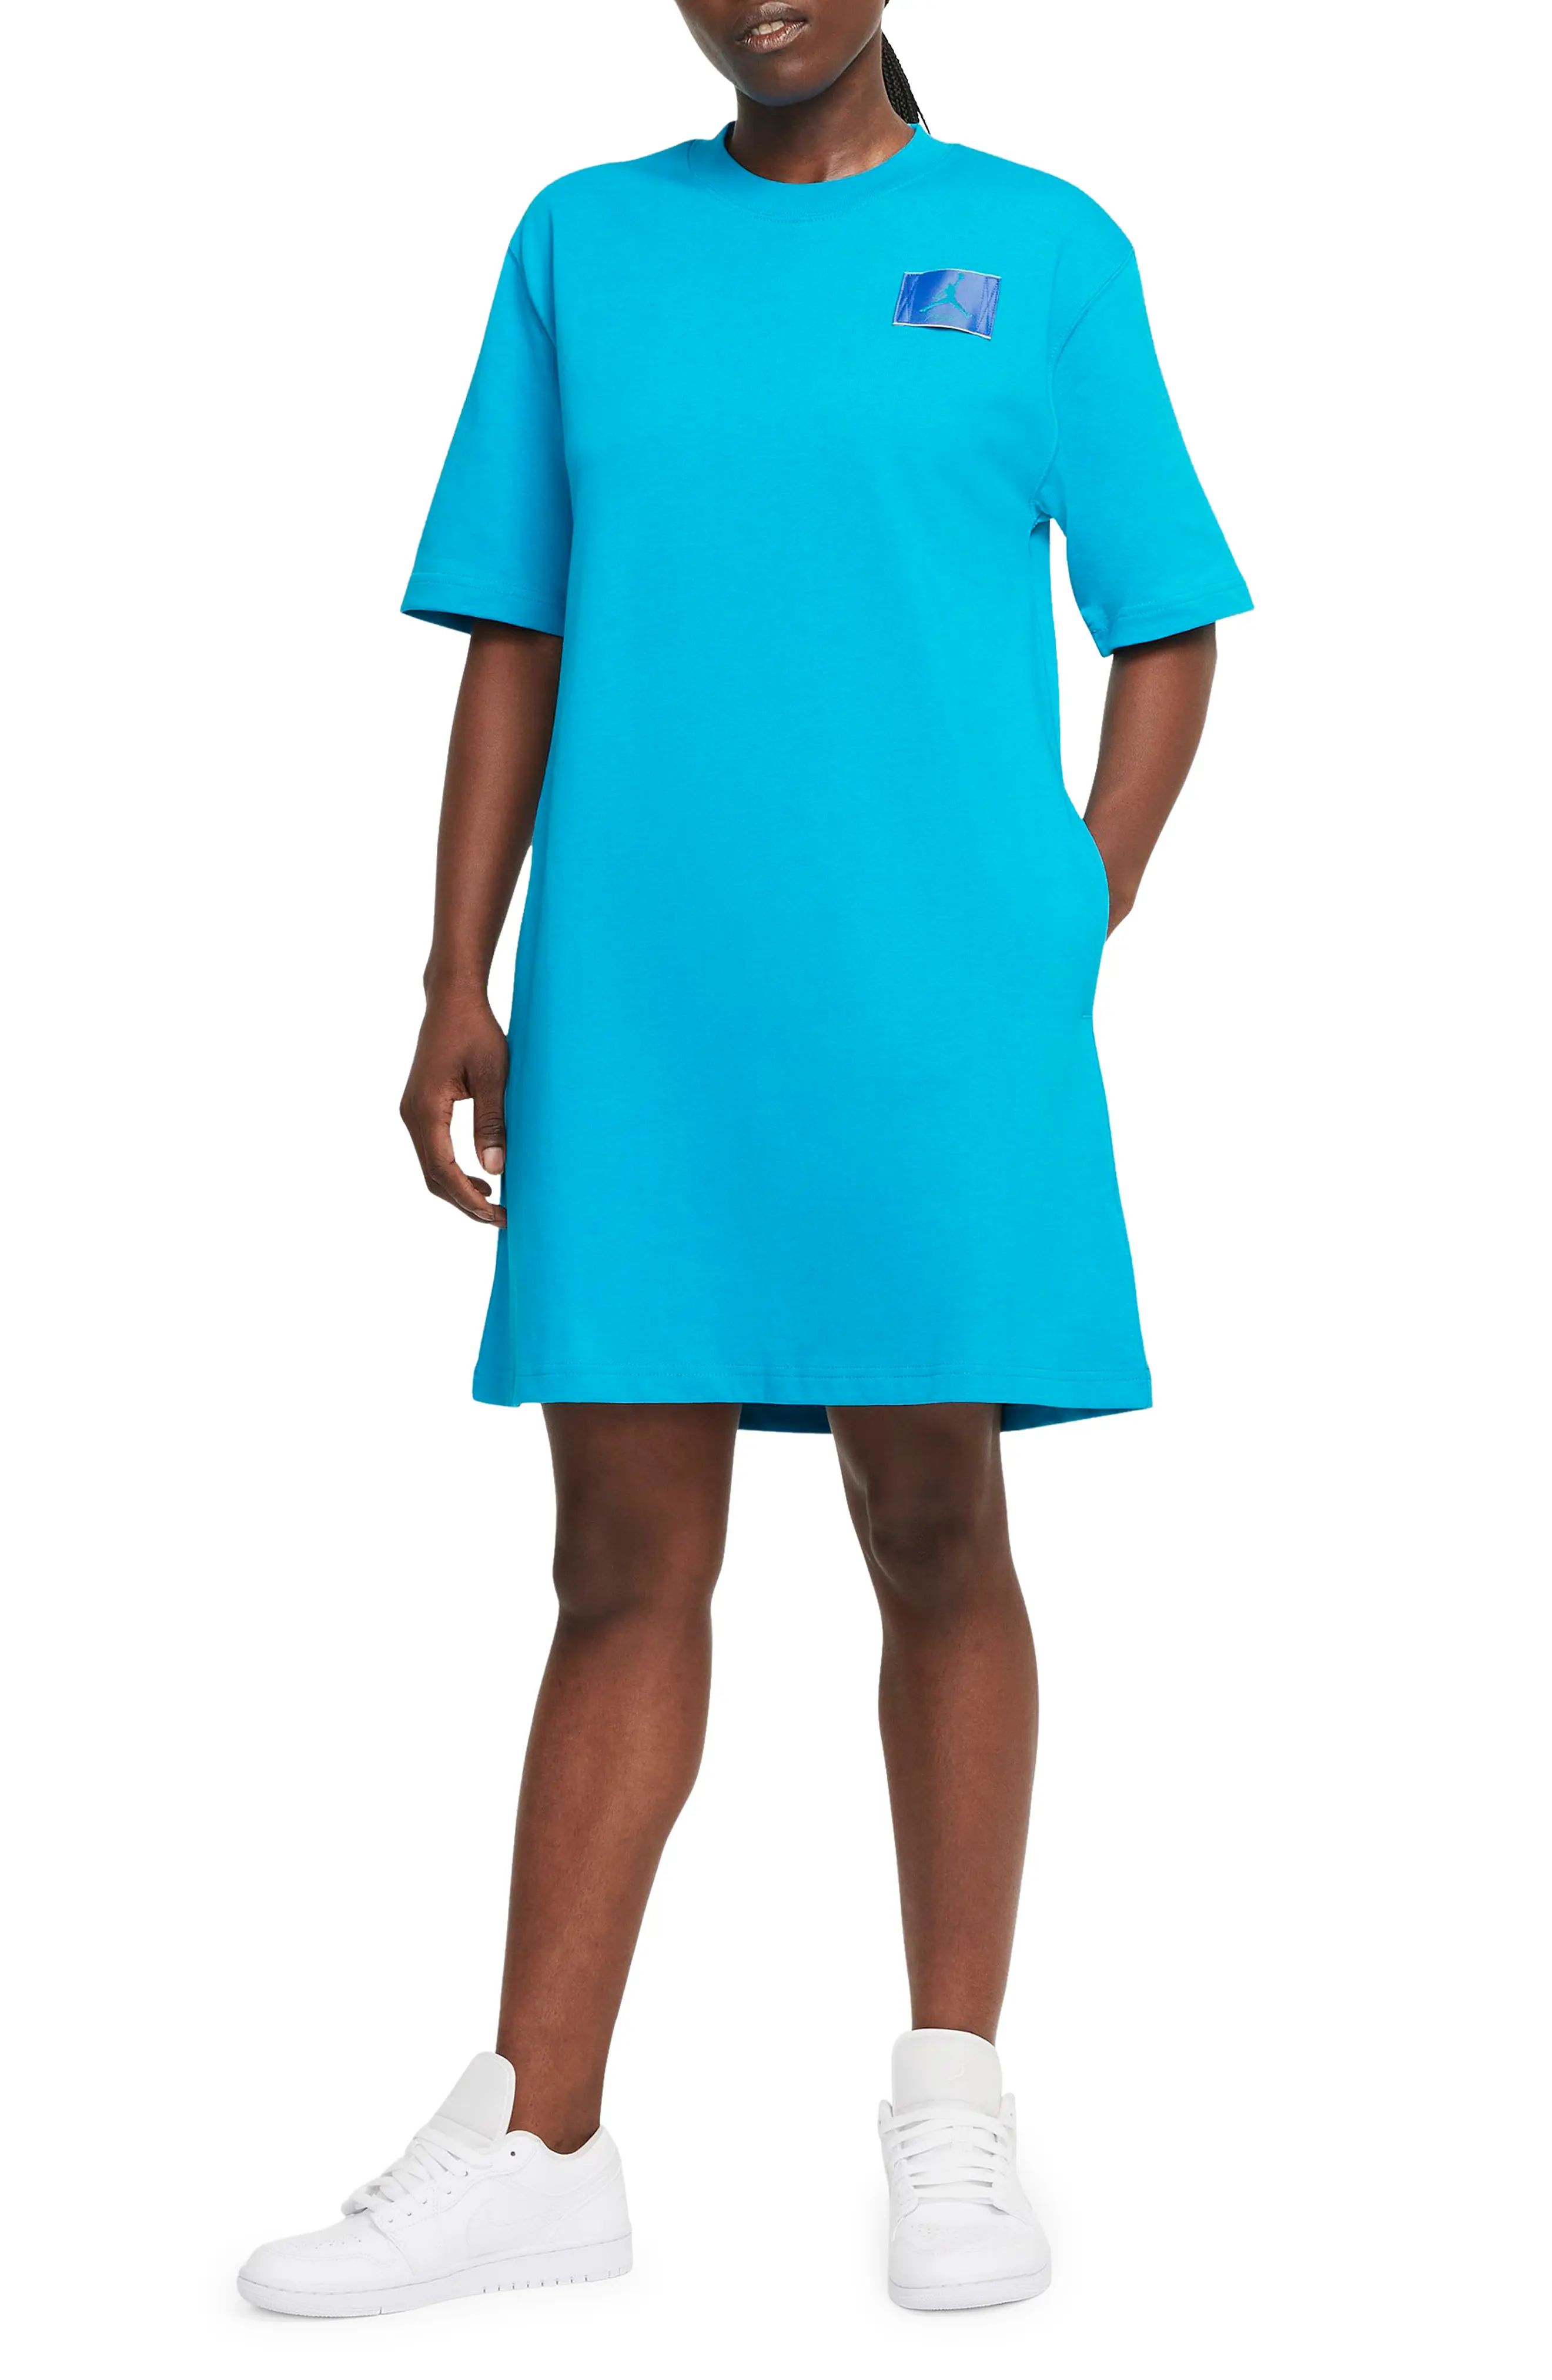 Nike Jordan Essential T-Shirt Dress in Blue Lagoon at Nordstrom, Size Large | Nordstrom